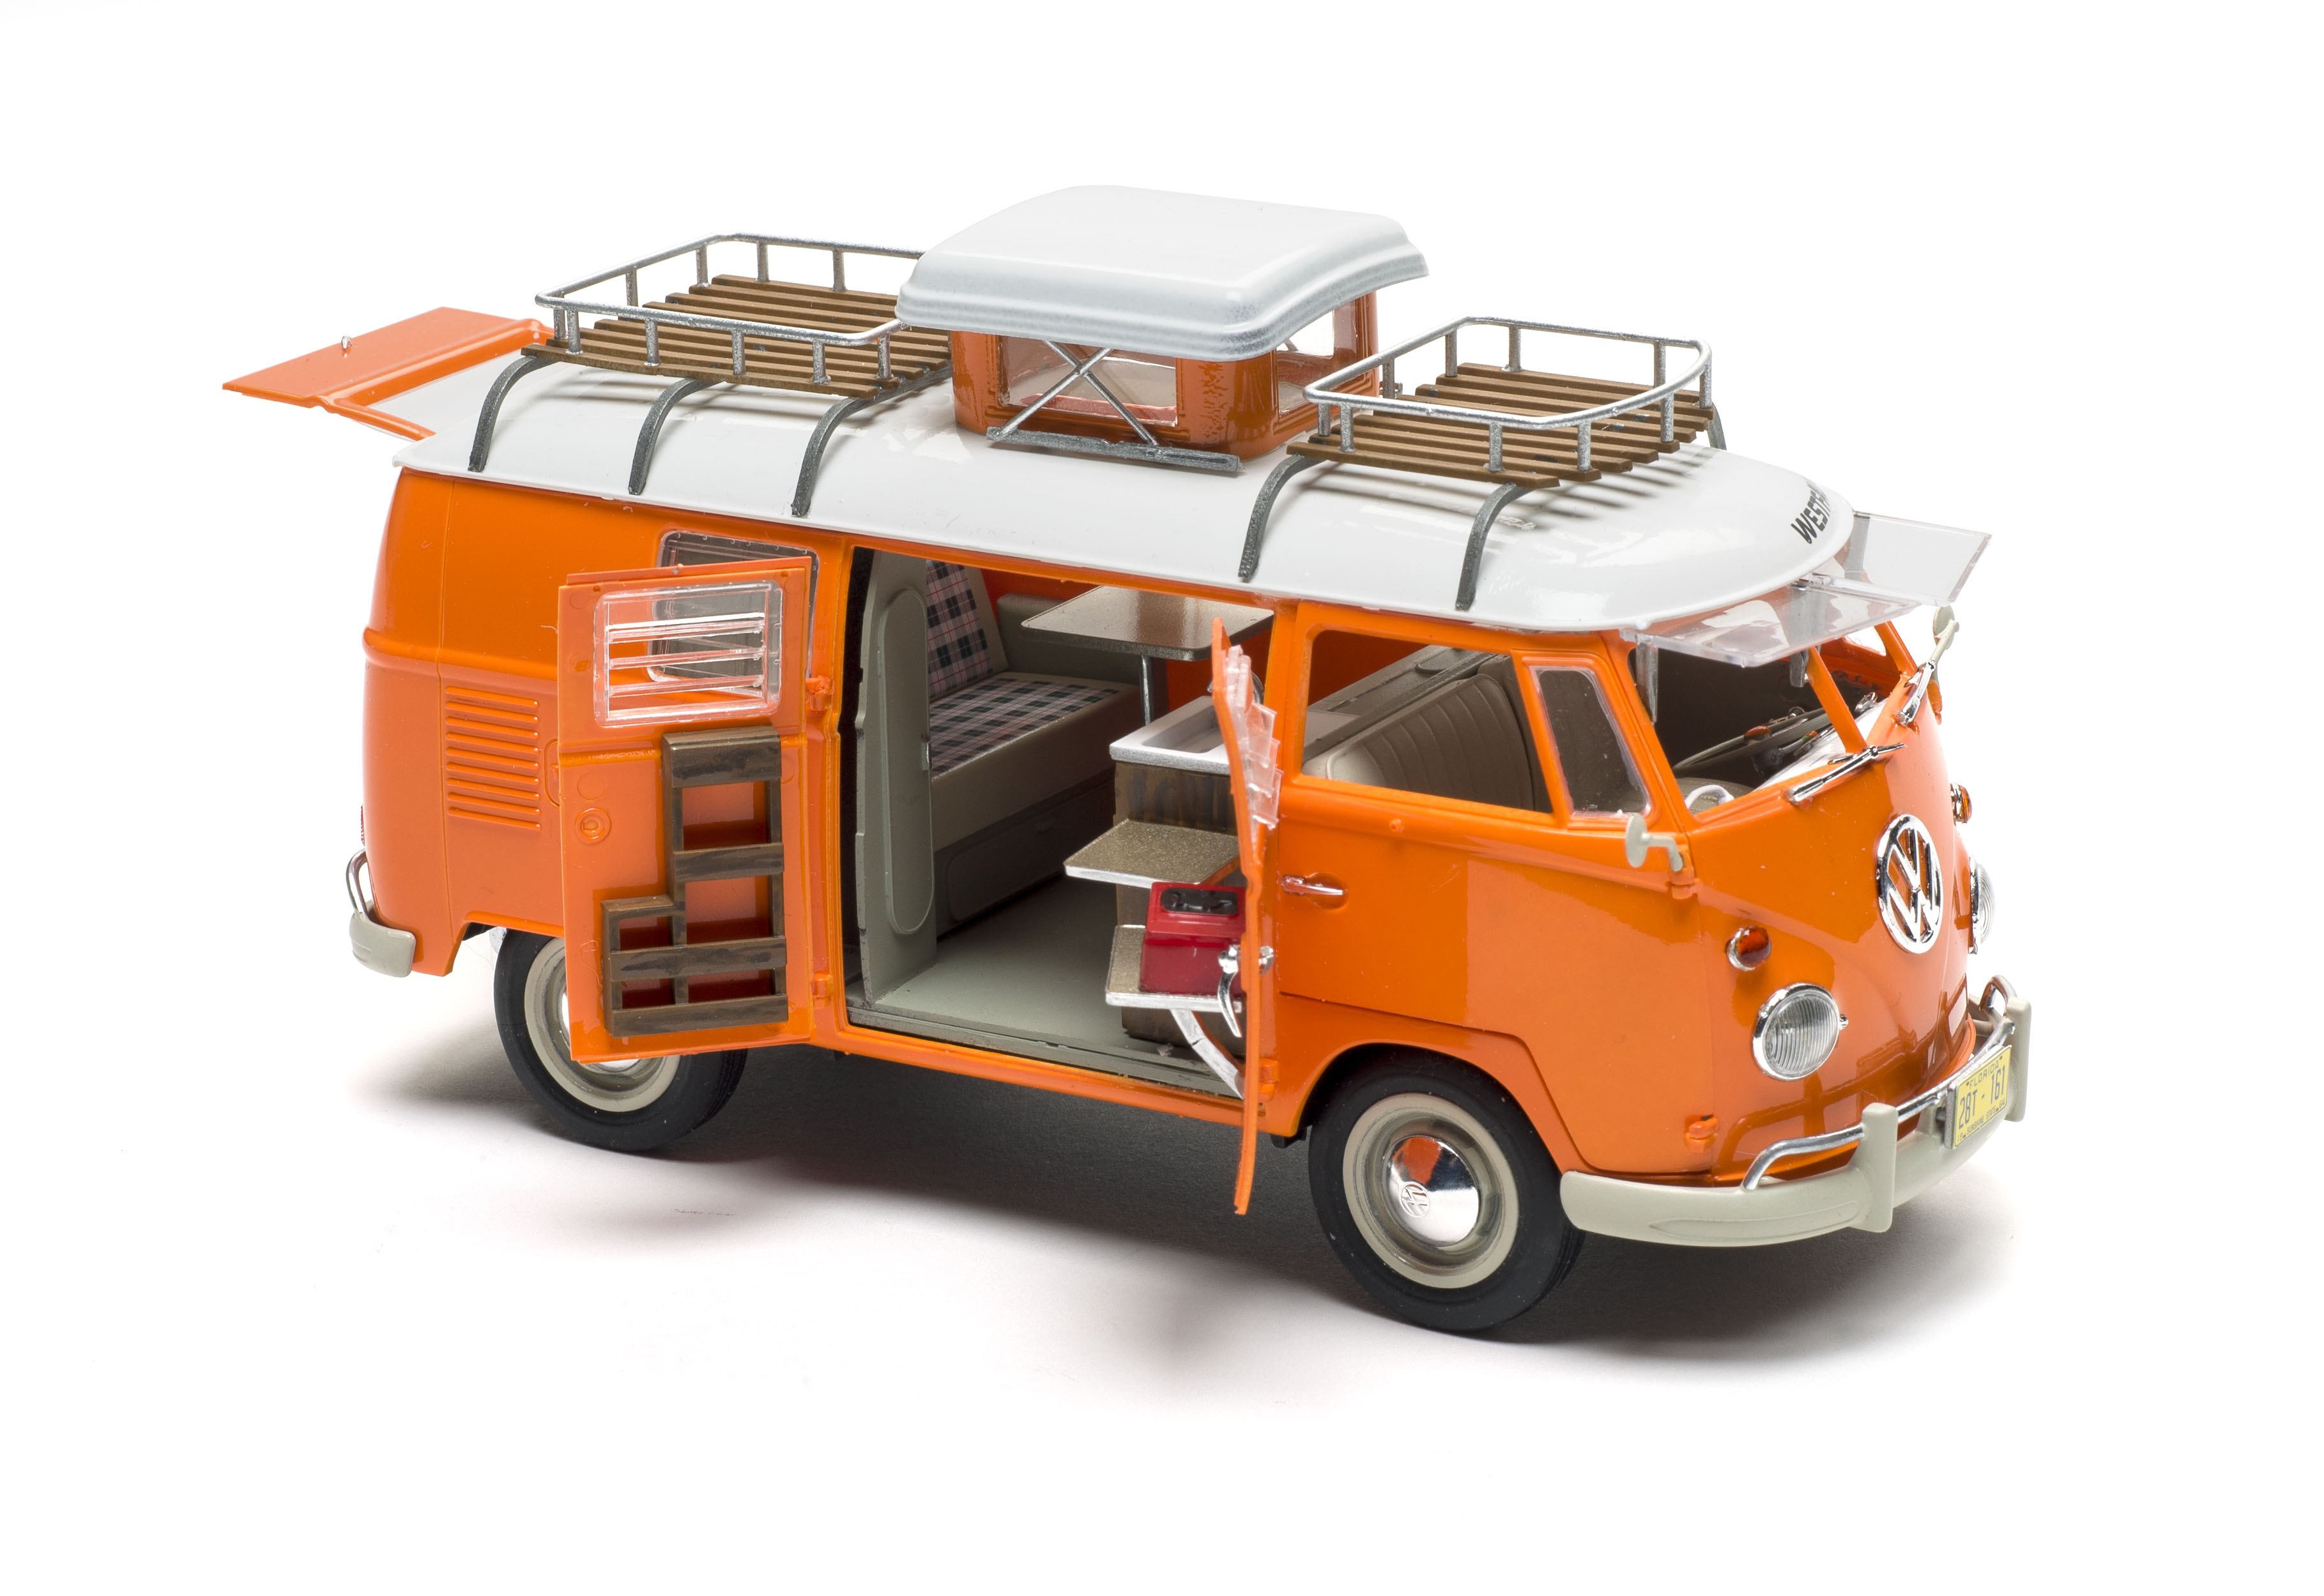 Renderen Doen Missionaris Build review of the Revell Volkswagen T1 bus camper scale model auto kit |  FineScale Modeler Magazine